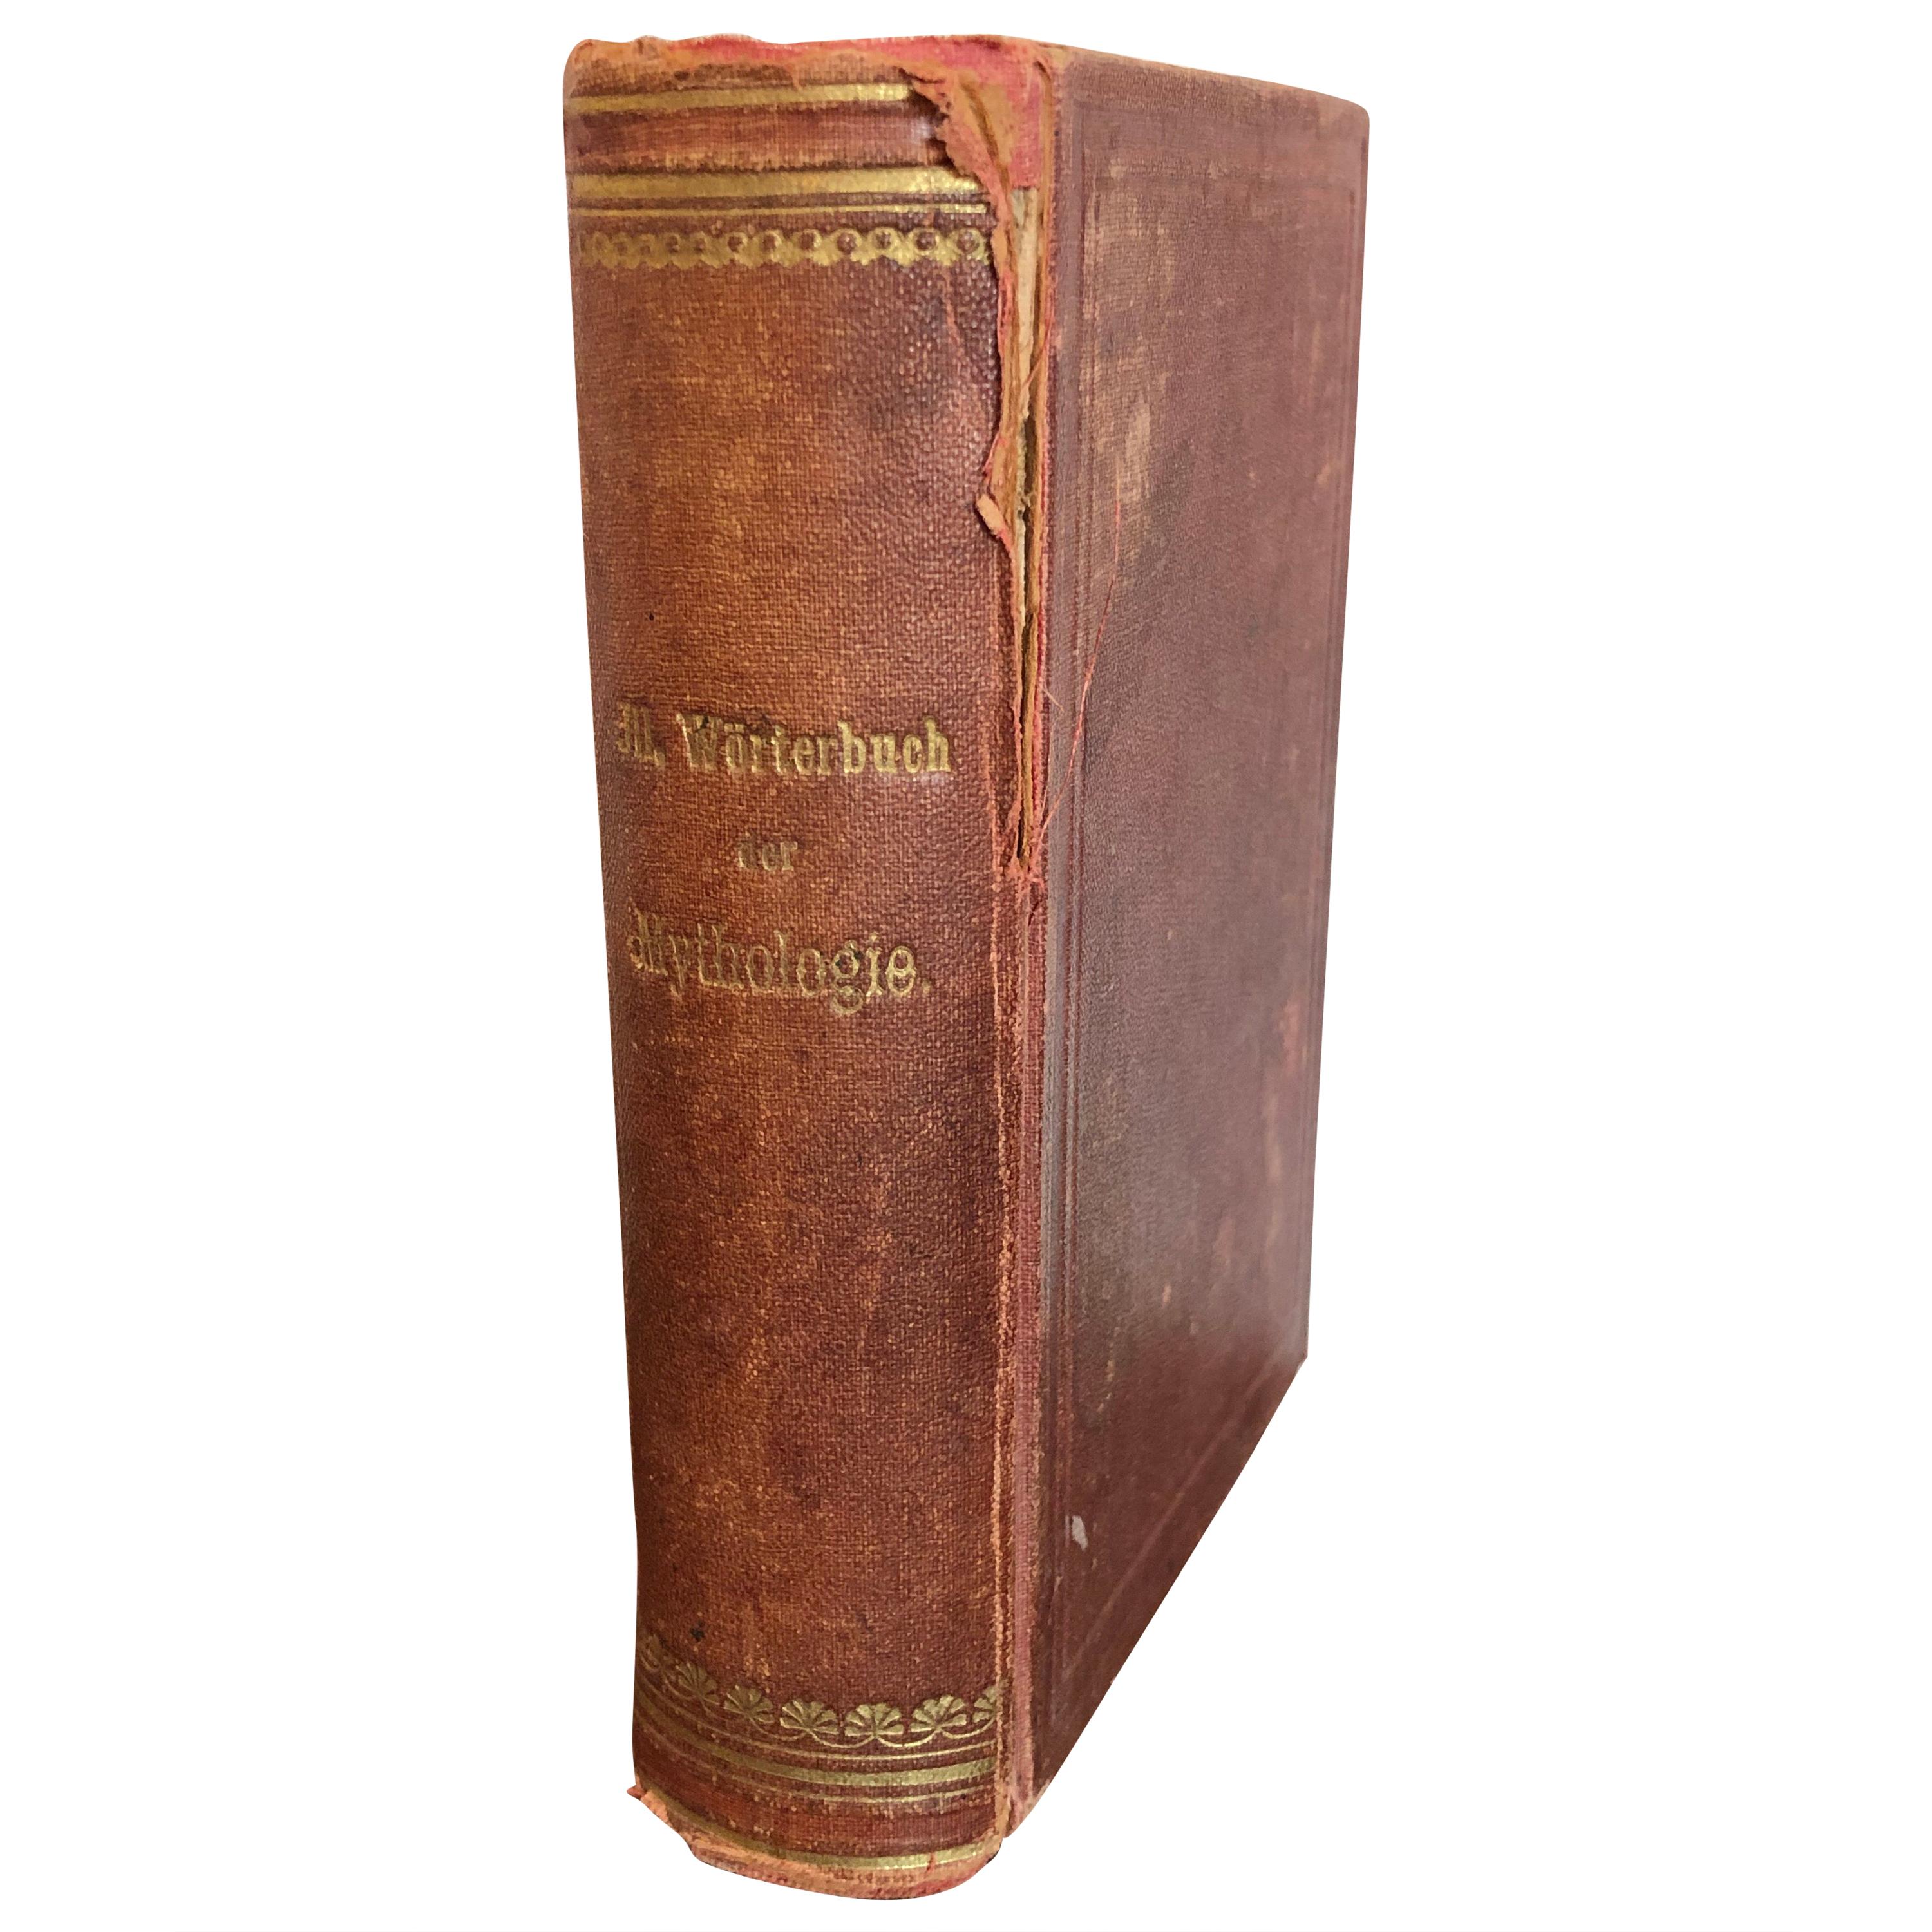 Small Mythology Pocket Book, Leipzig 1892 by Johannes Minckwitz